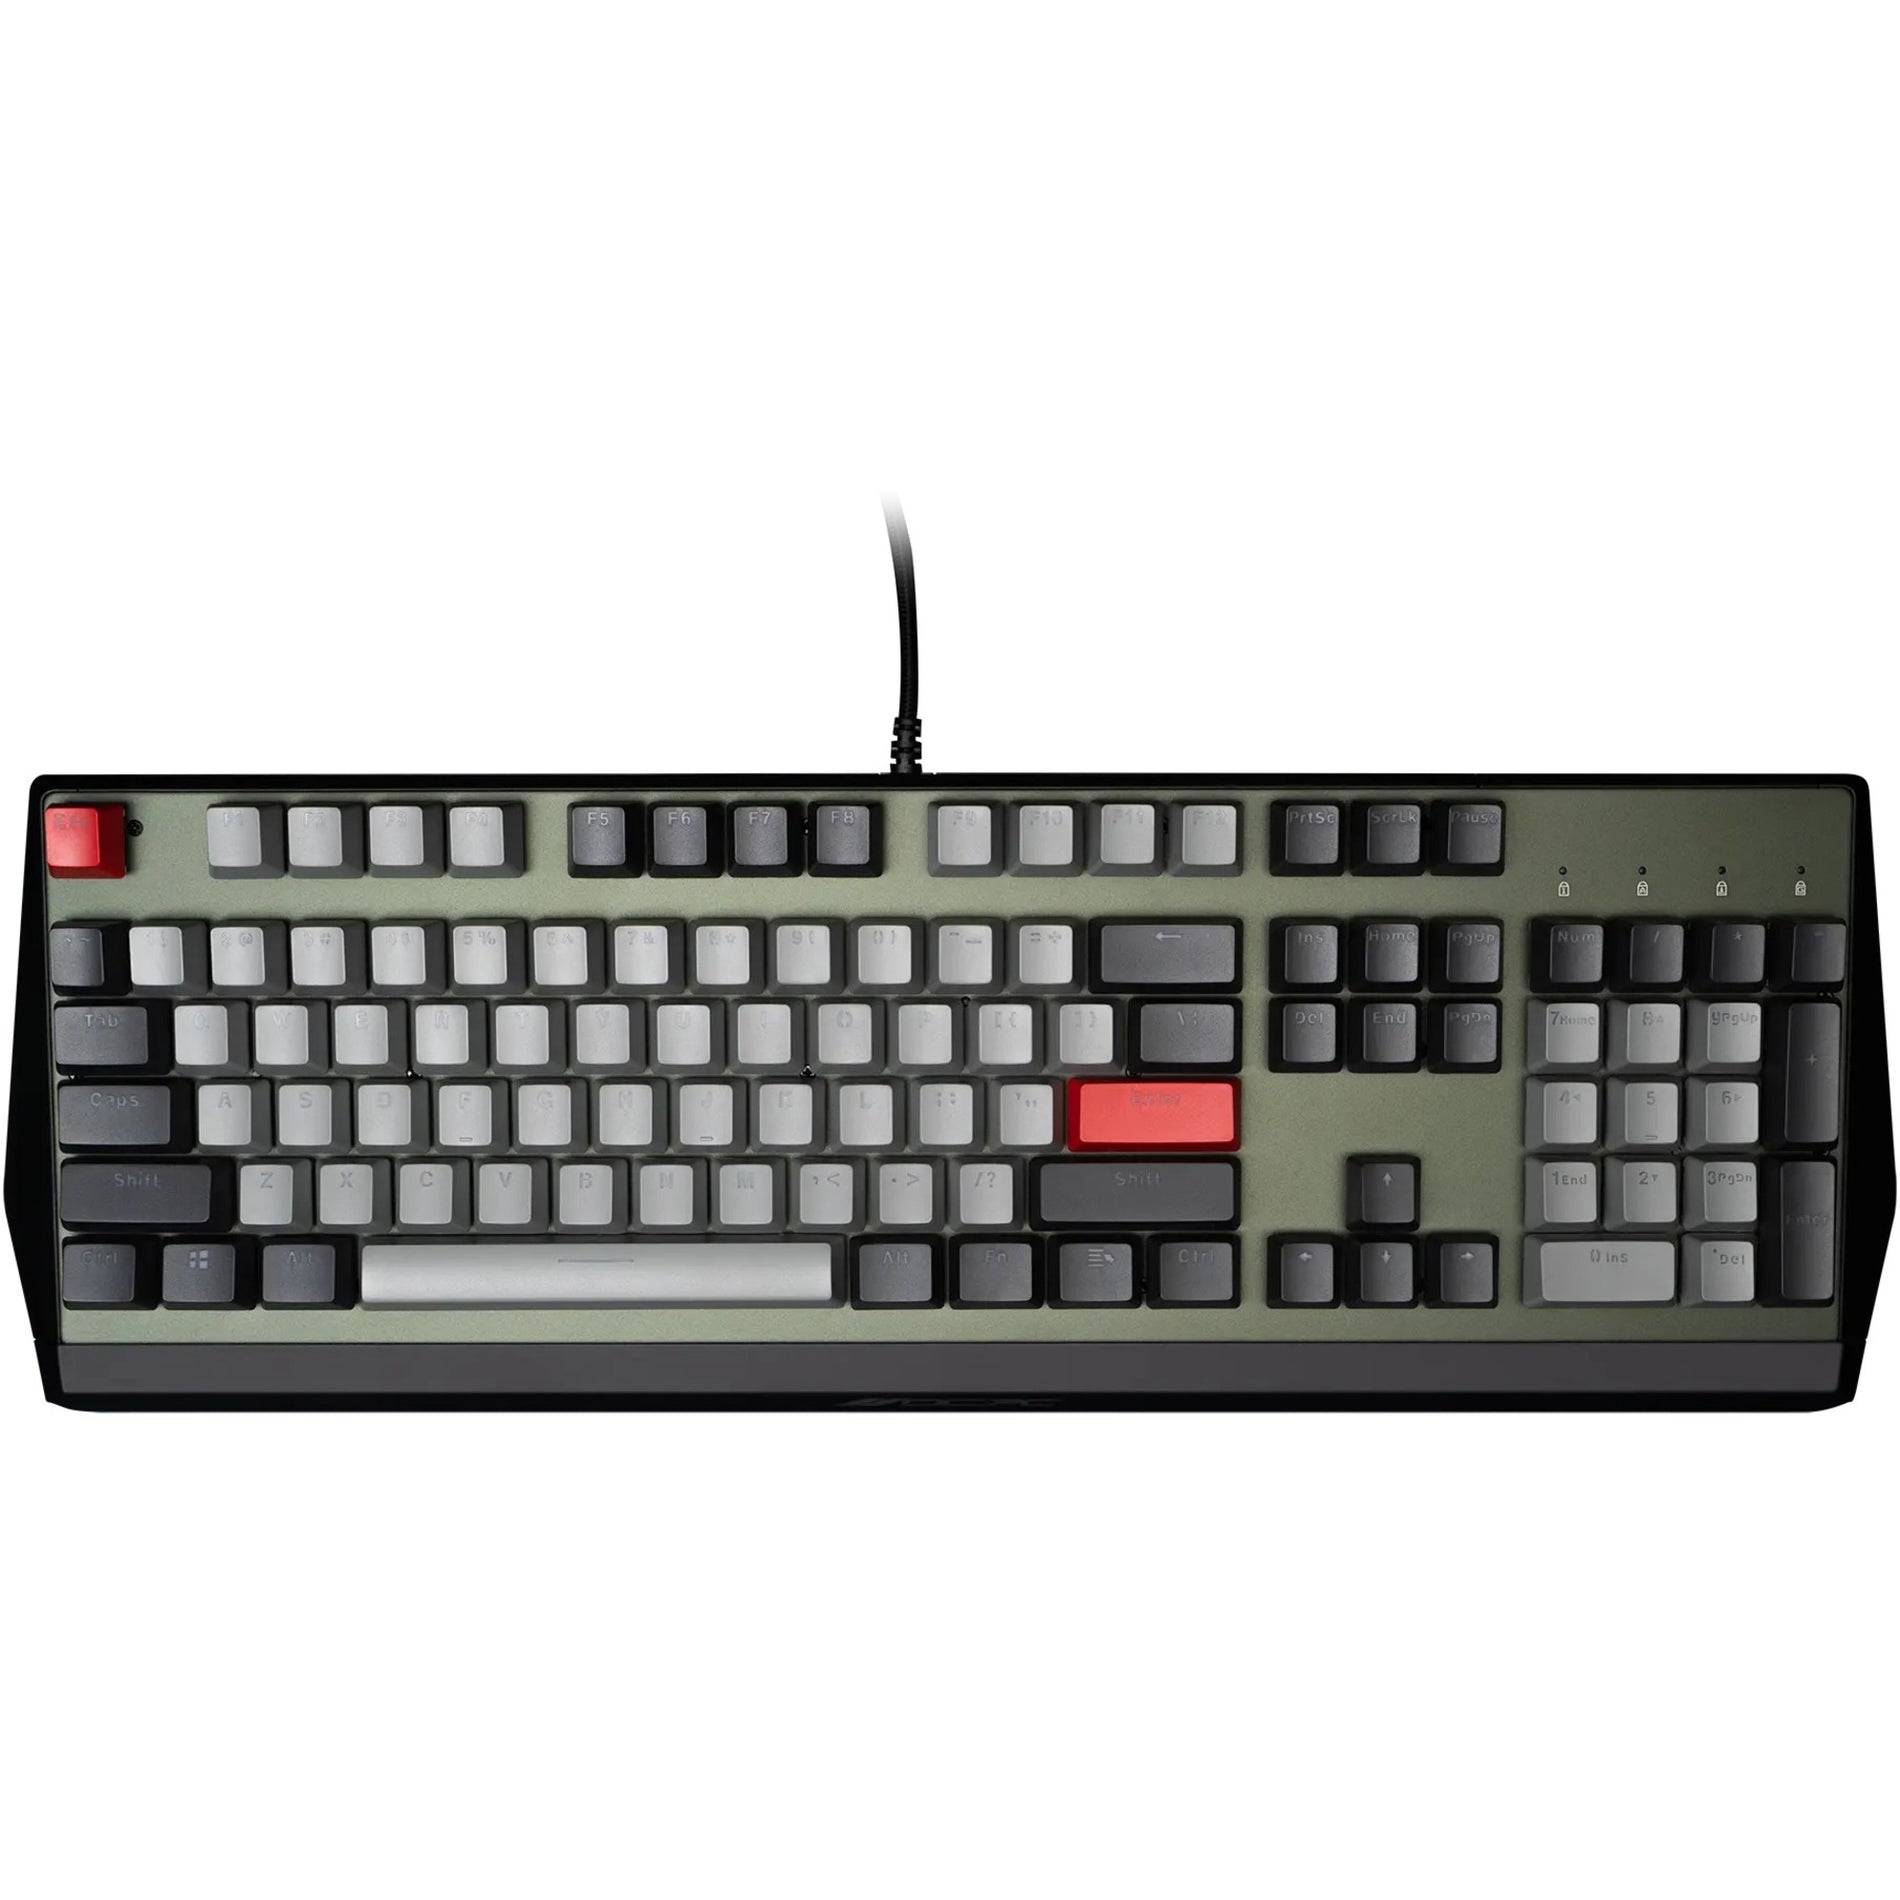 VisionTek 901540 OCPC Gaming - KR1 Premium Mechanical Keyboard, RGB Backlight, Anti-ghosting, Ergonomic Design